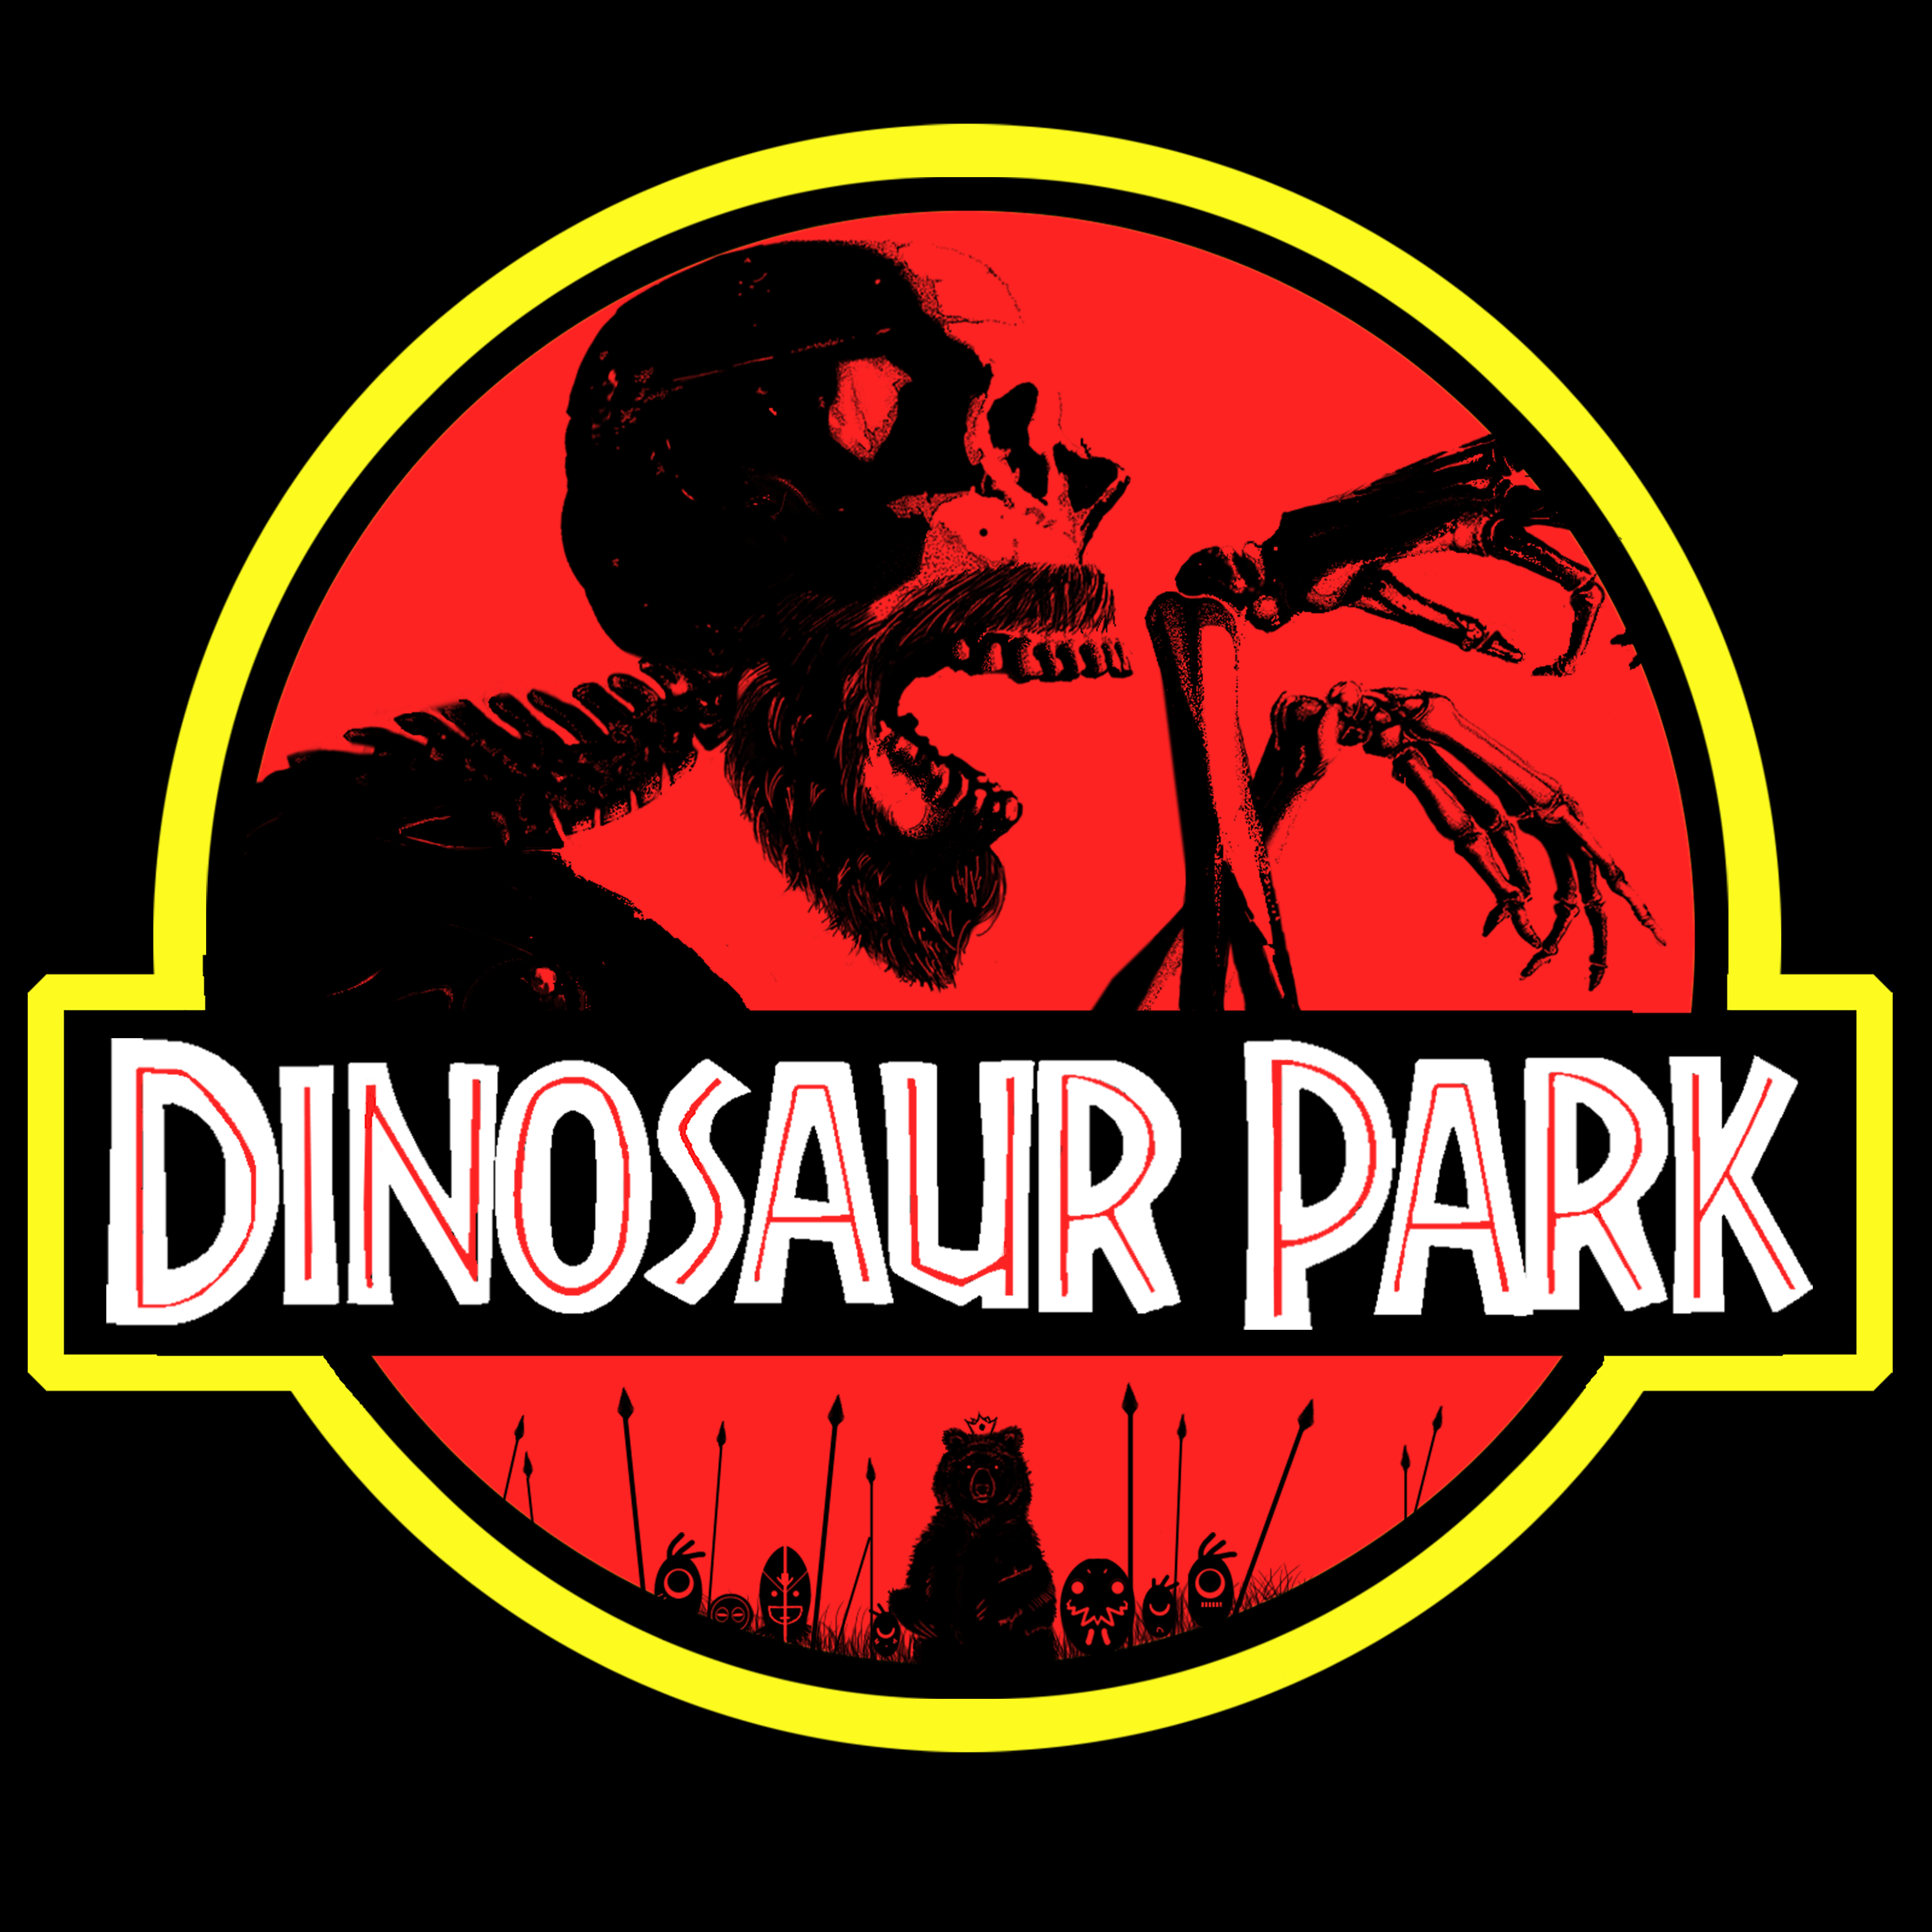 Dinosaur Park #12 Wizards of the Park